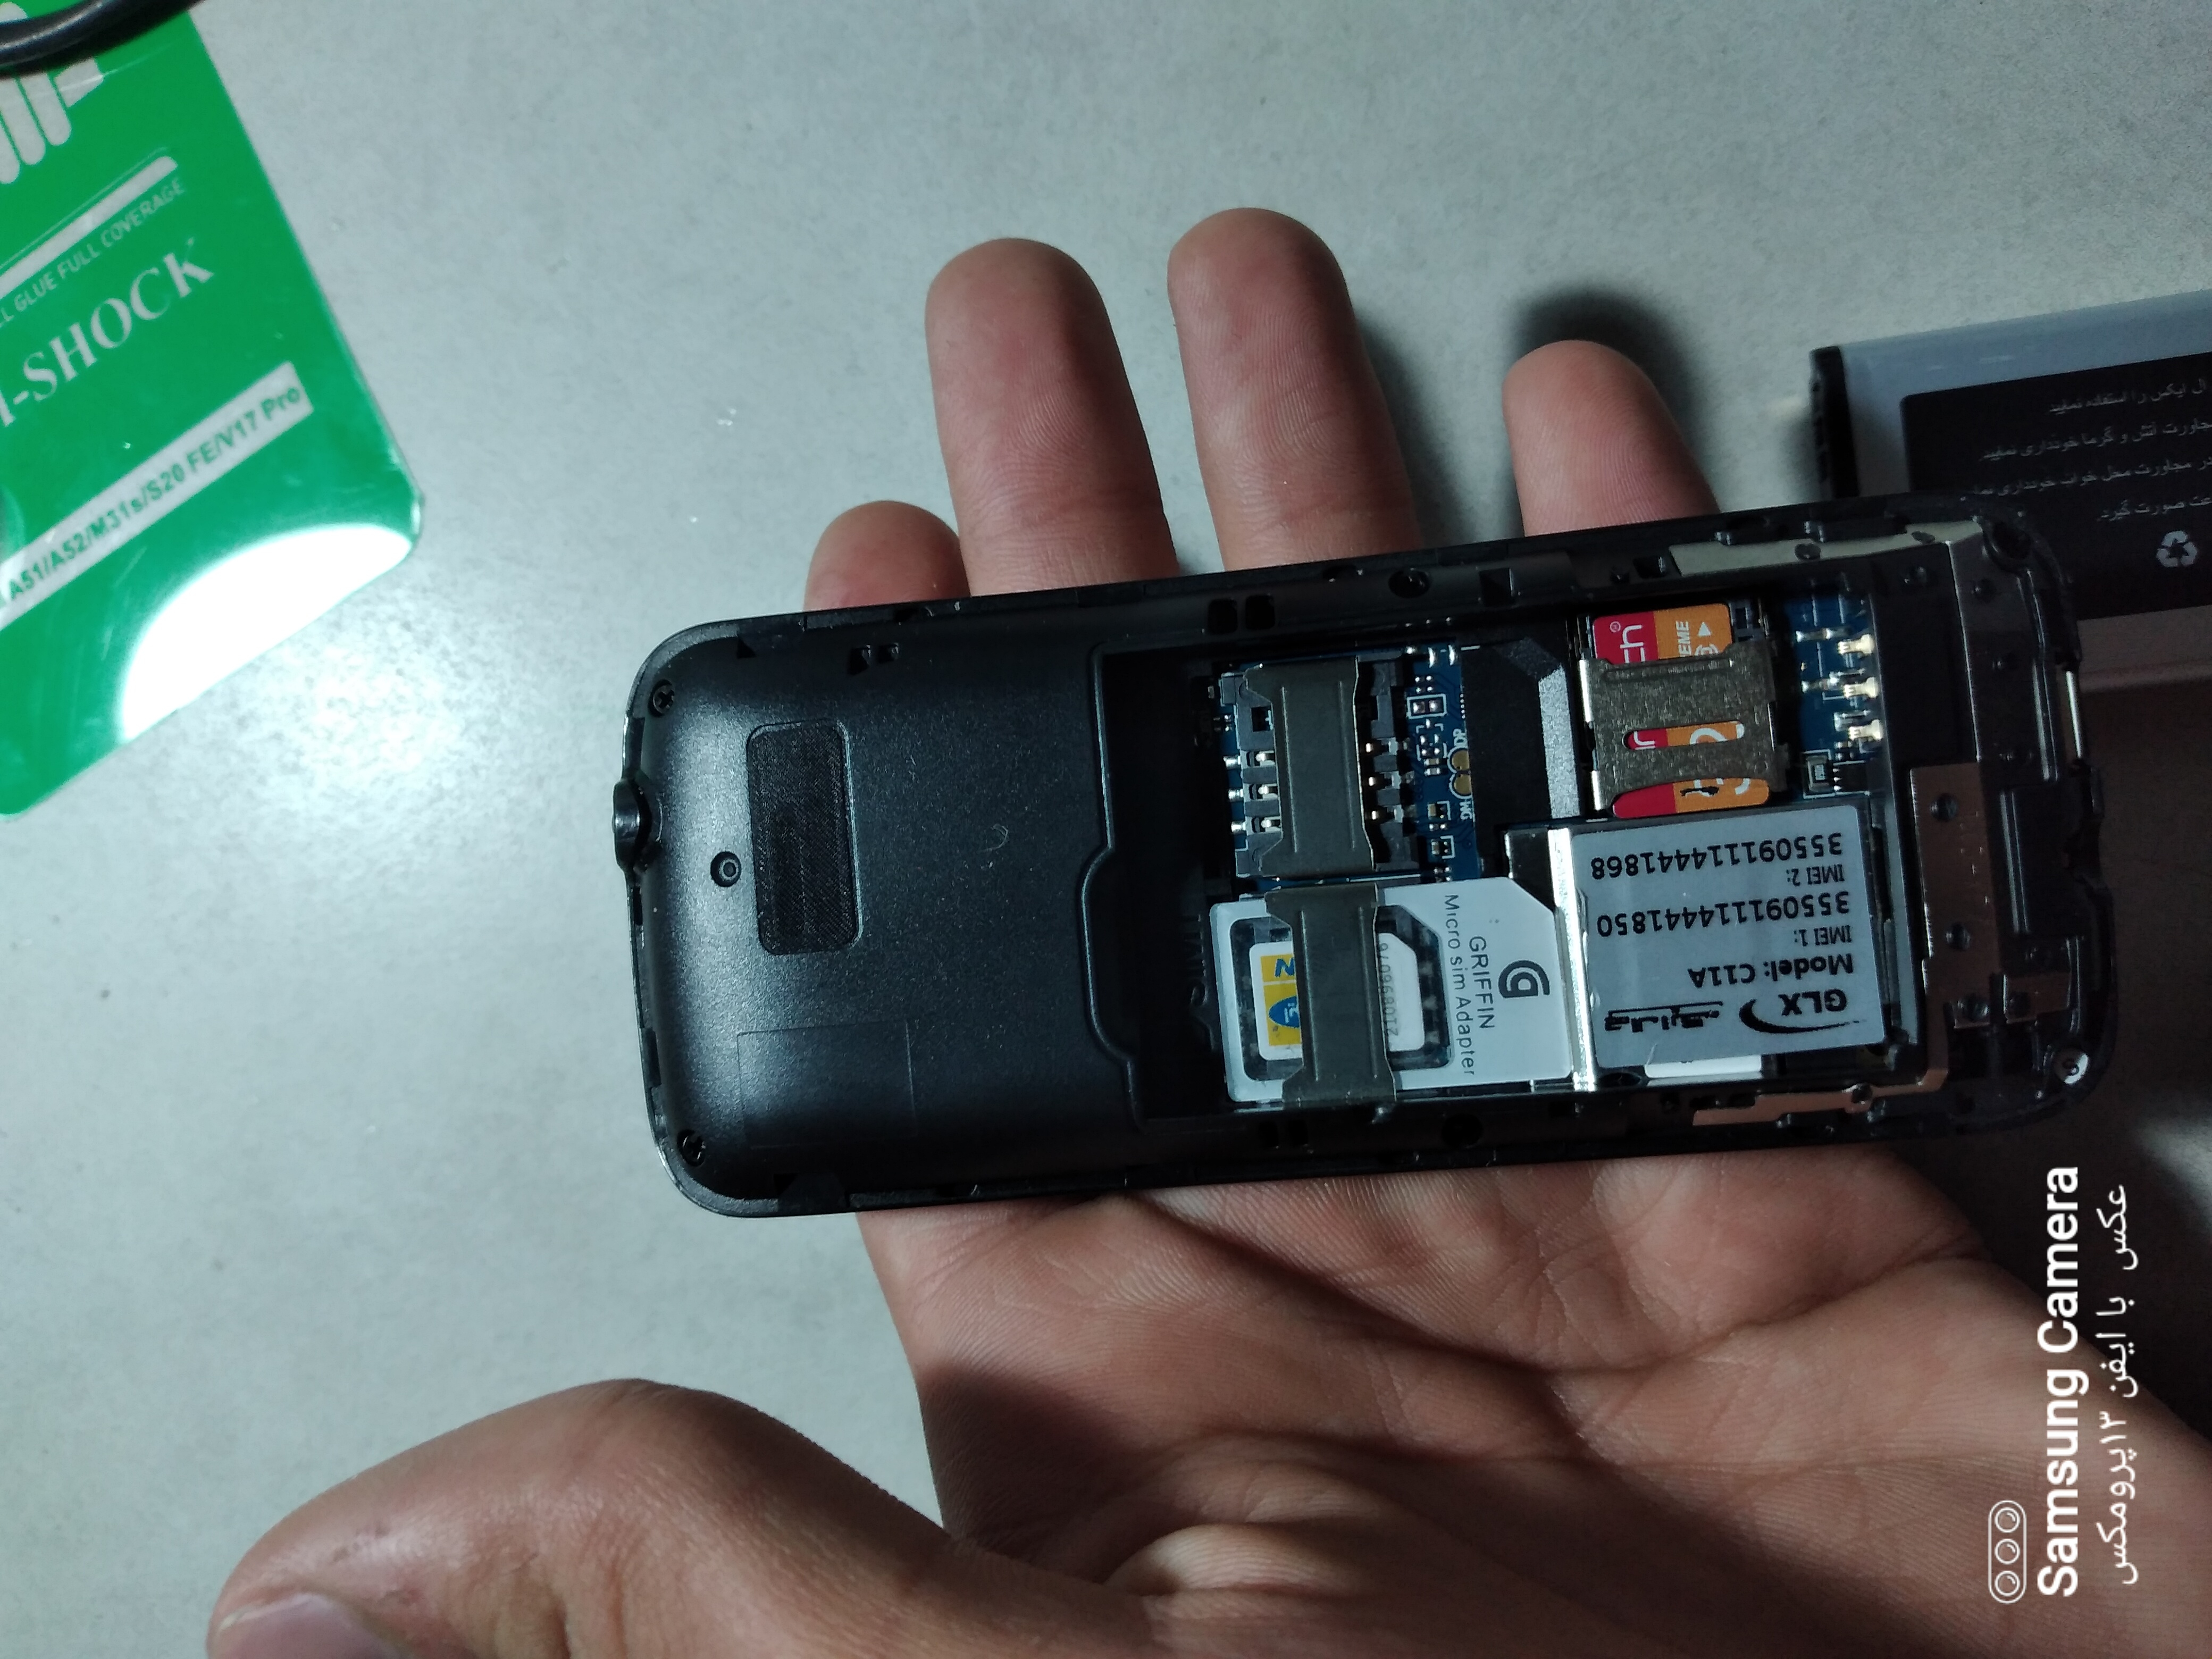 گوشی موبایل جی ال ایکس دو سیم کارت مدل C11A